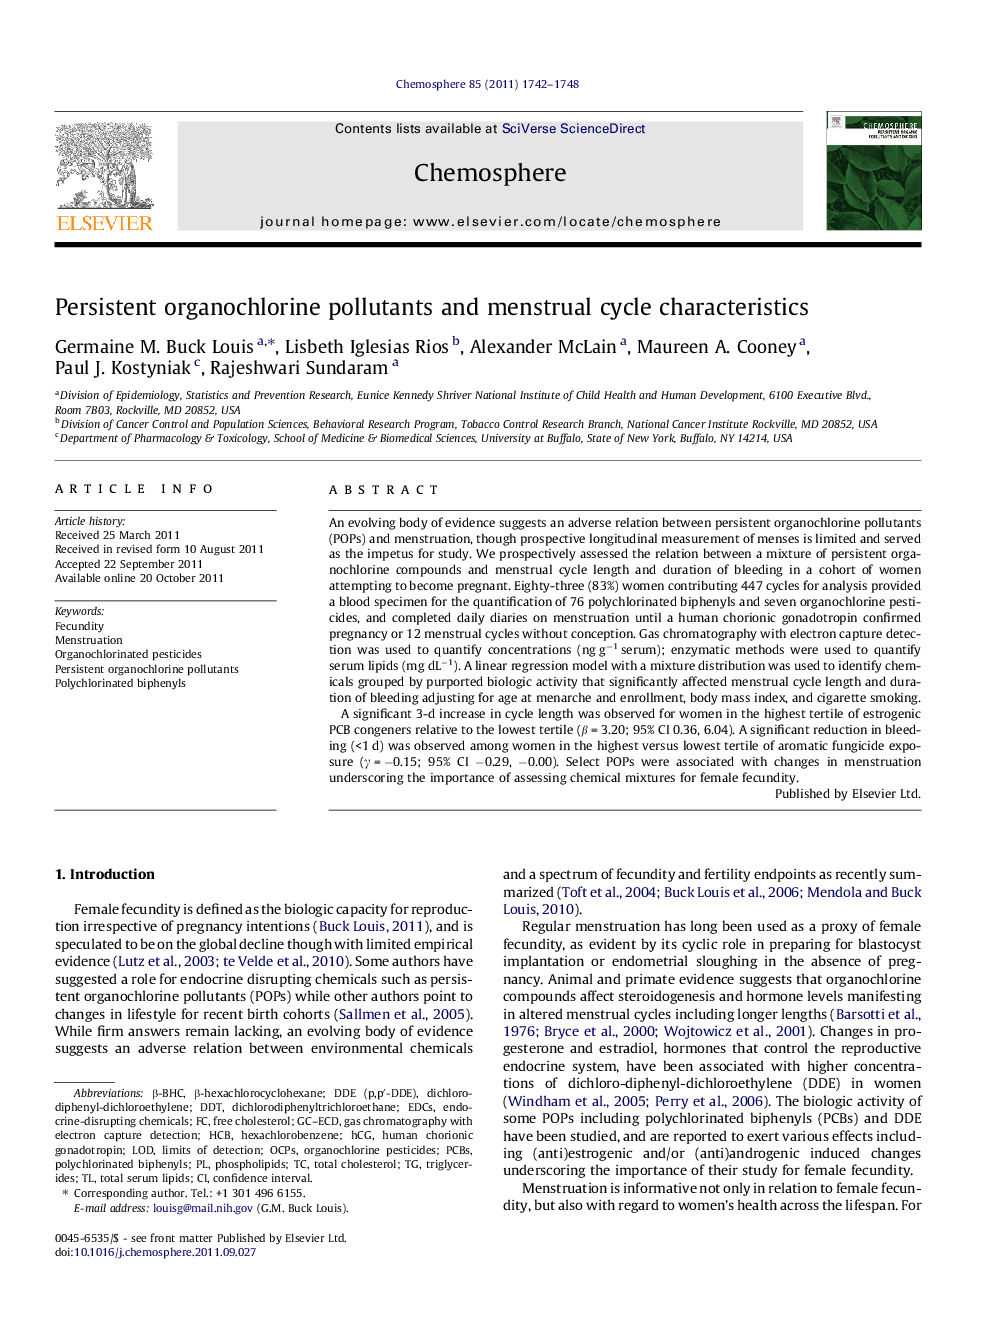 Persistent organochlorine pollutants and menstrual cycle characteristics